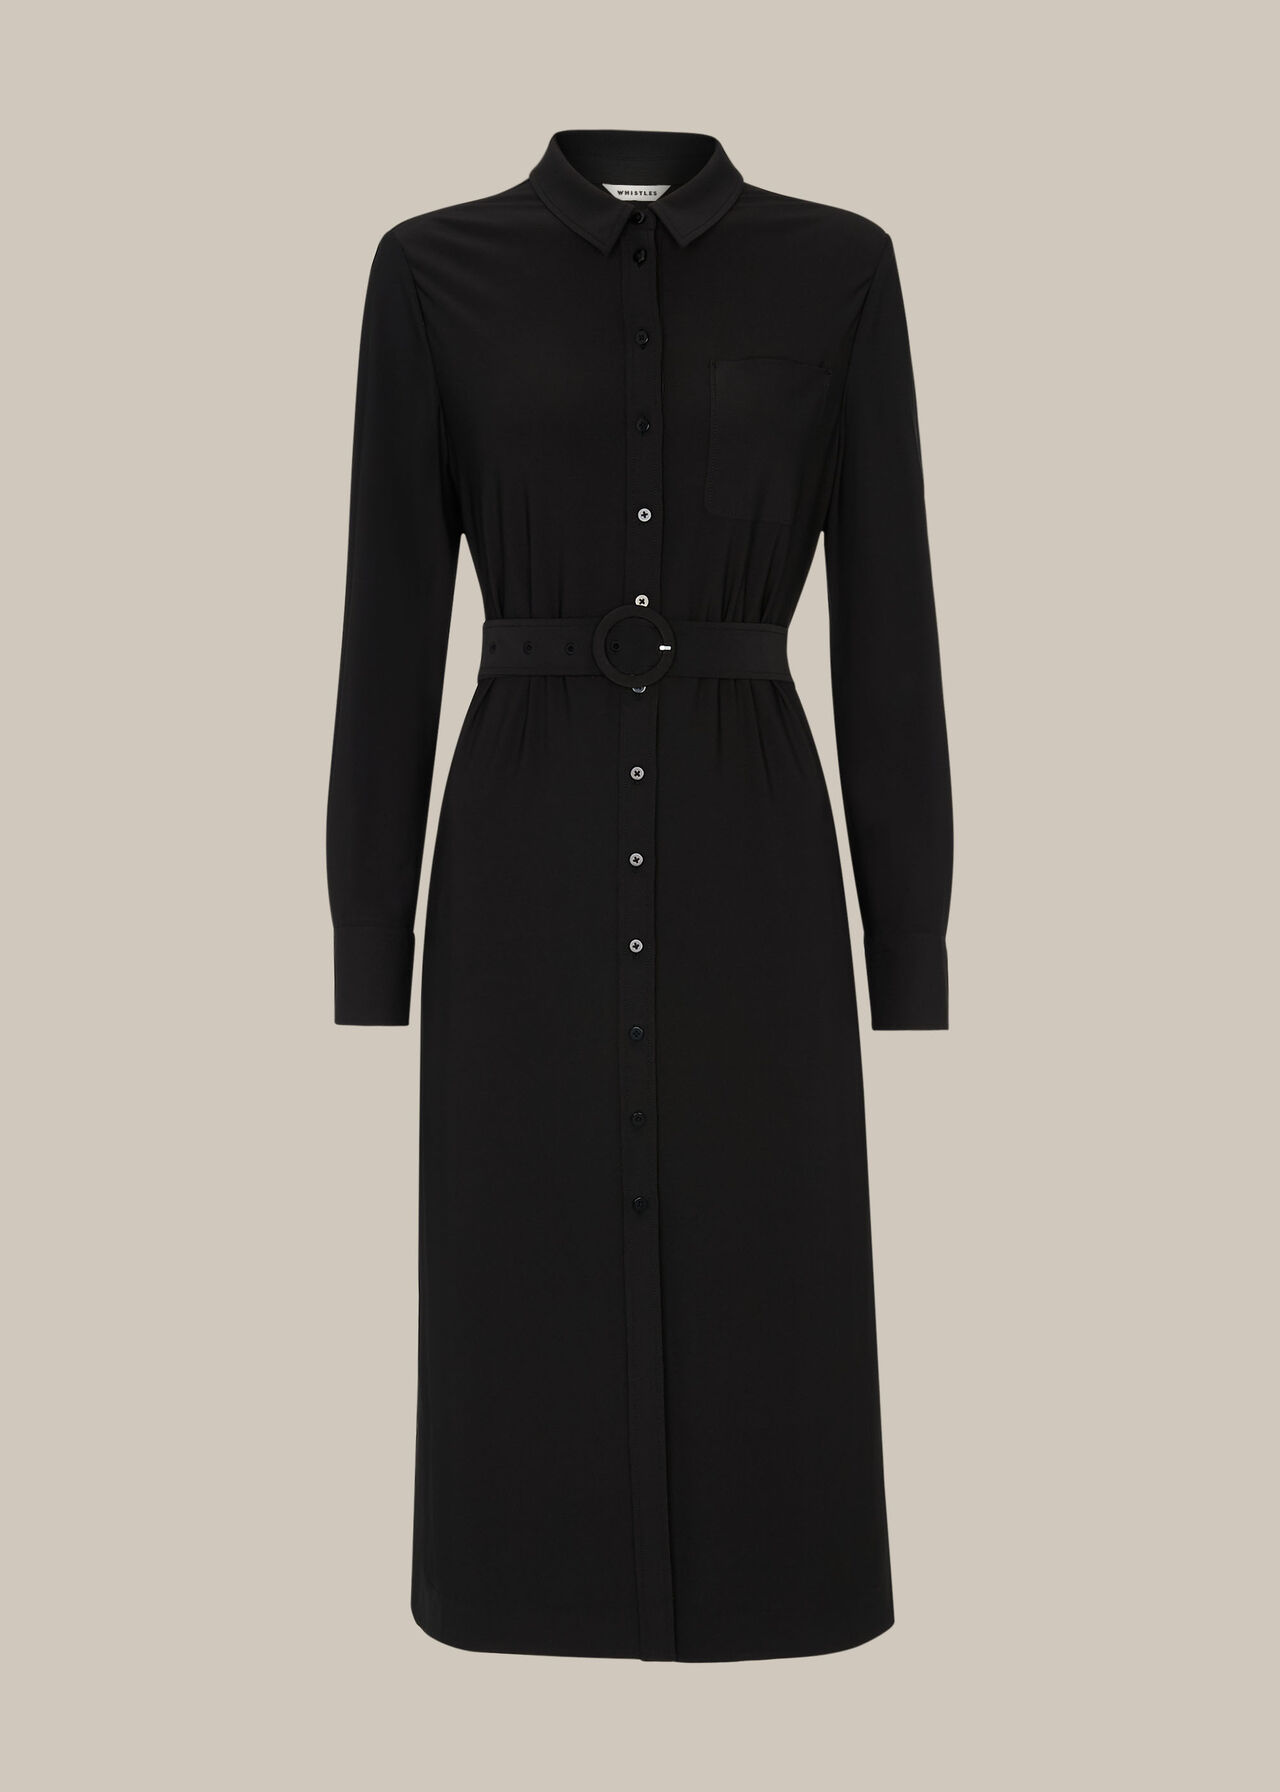 Black Premium Jersey Belted Dress | WHISTLES